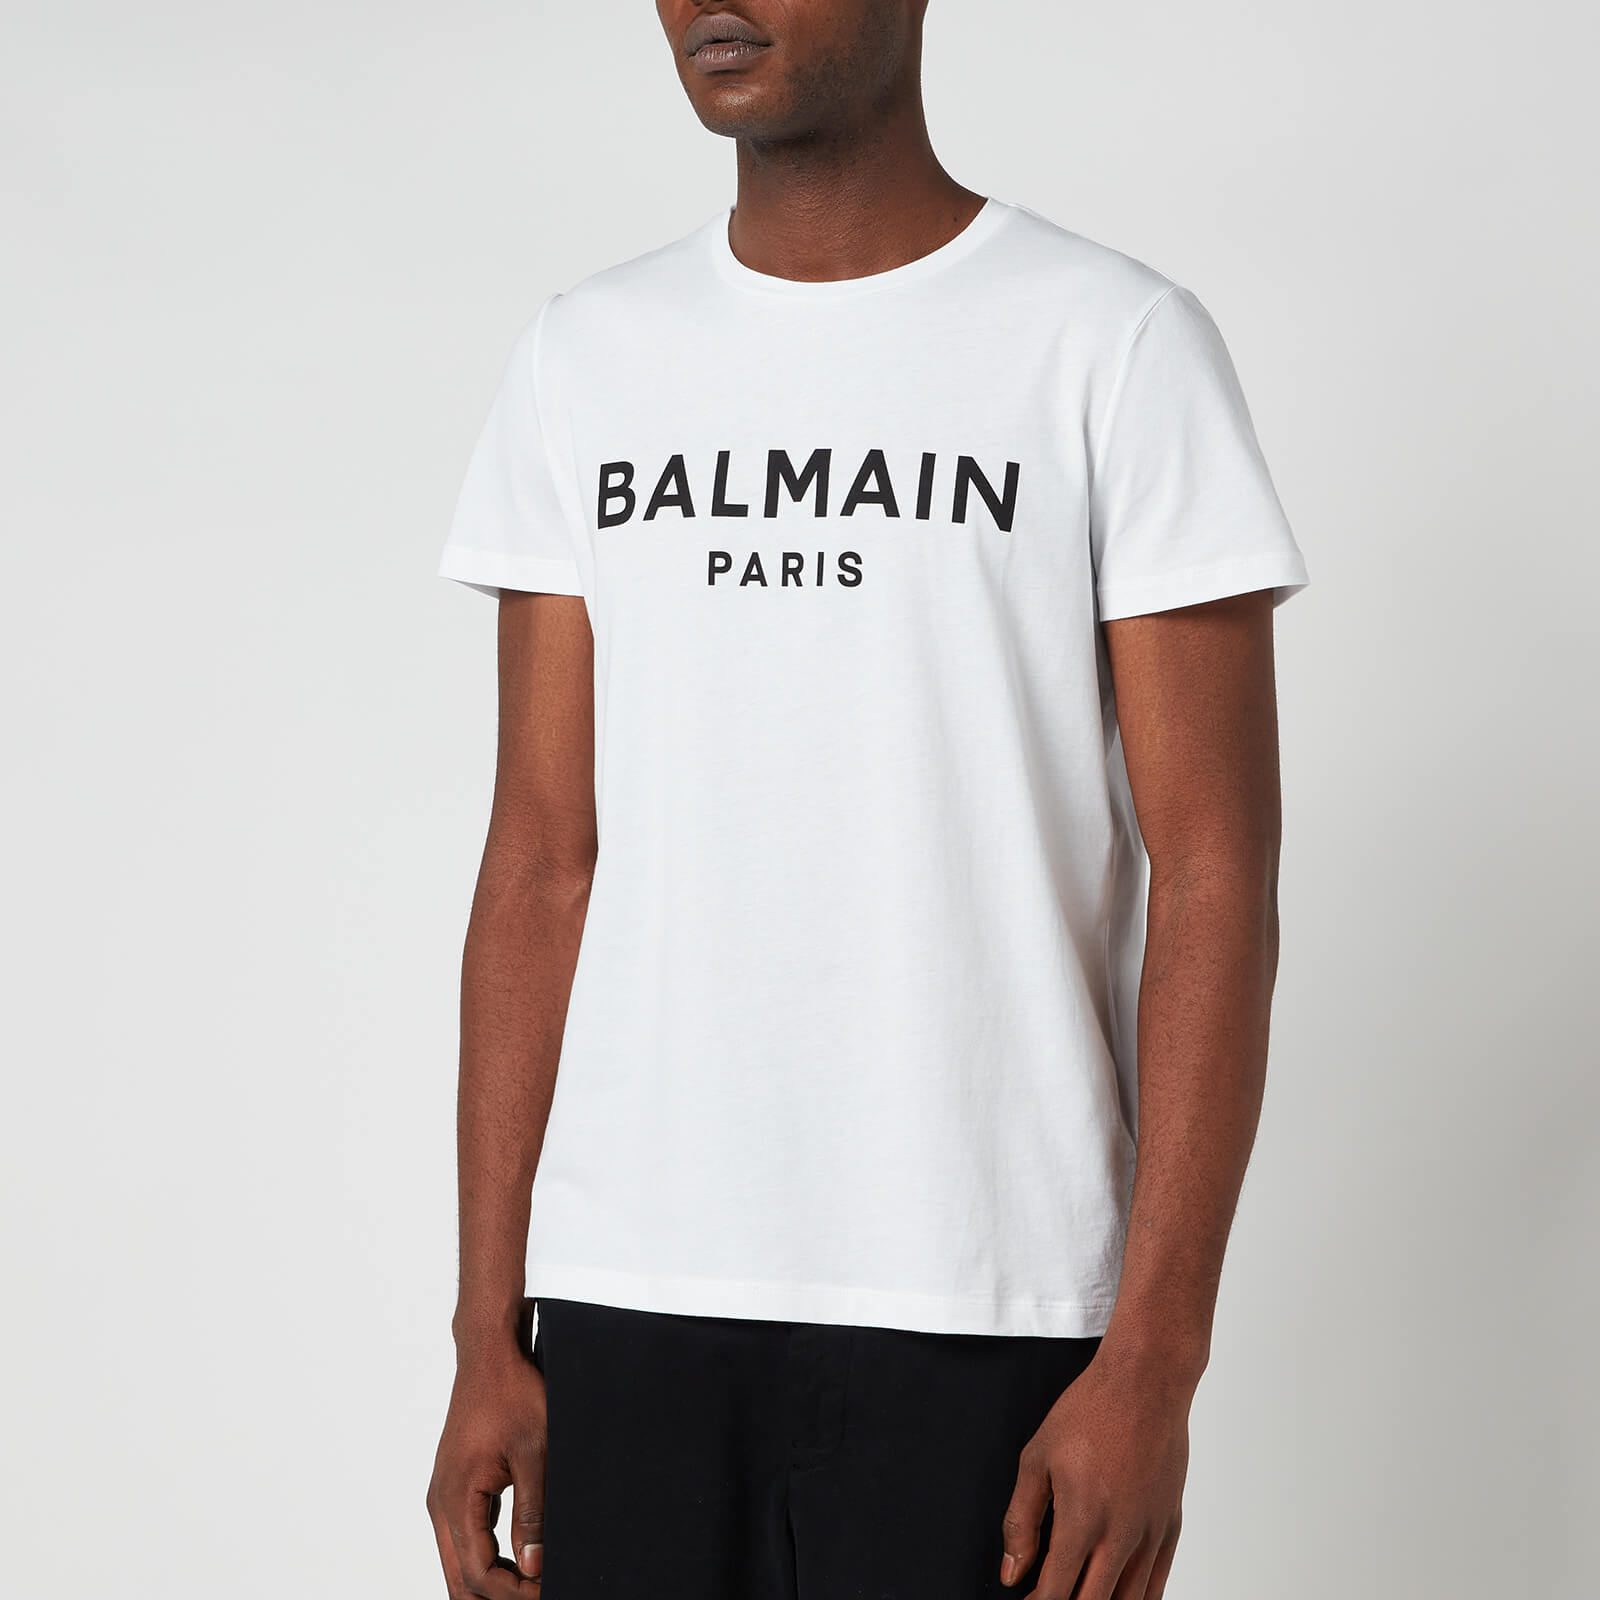 Balmain Men's Printed Logo T-Shirt - White/Black - M